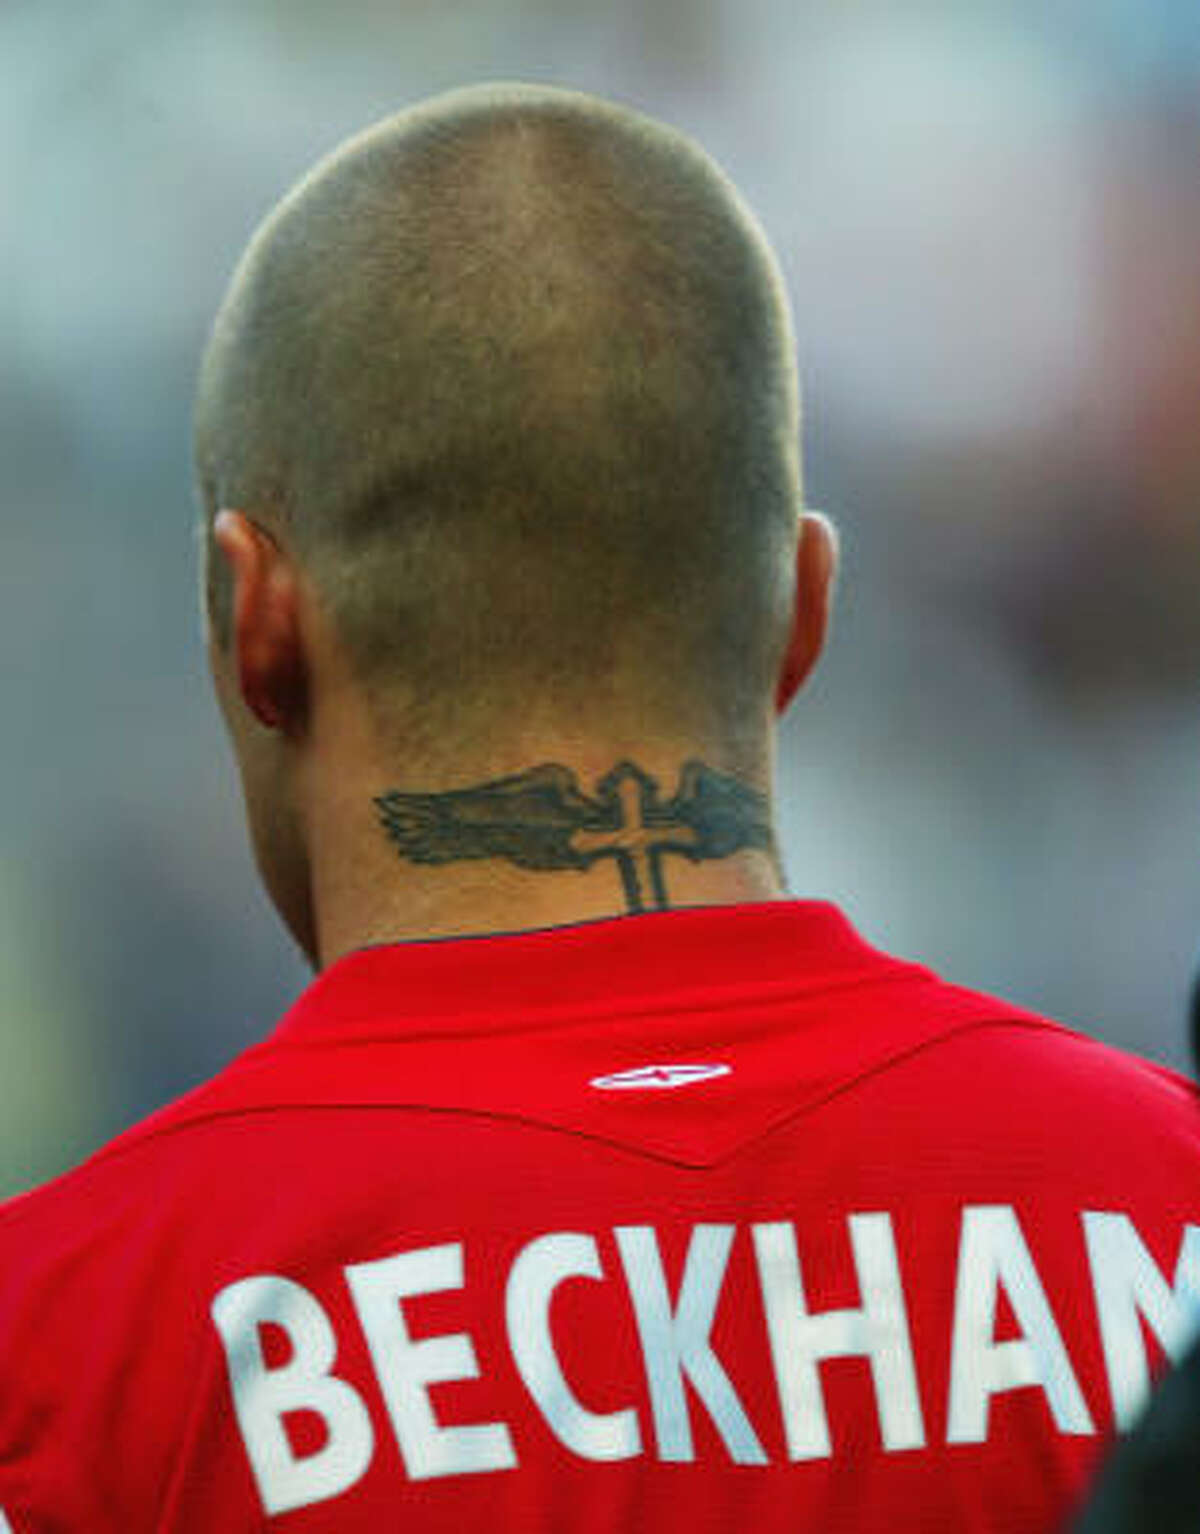 David Beckham Gets New Tattoo Tribute to Wife Victoria Beckham